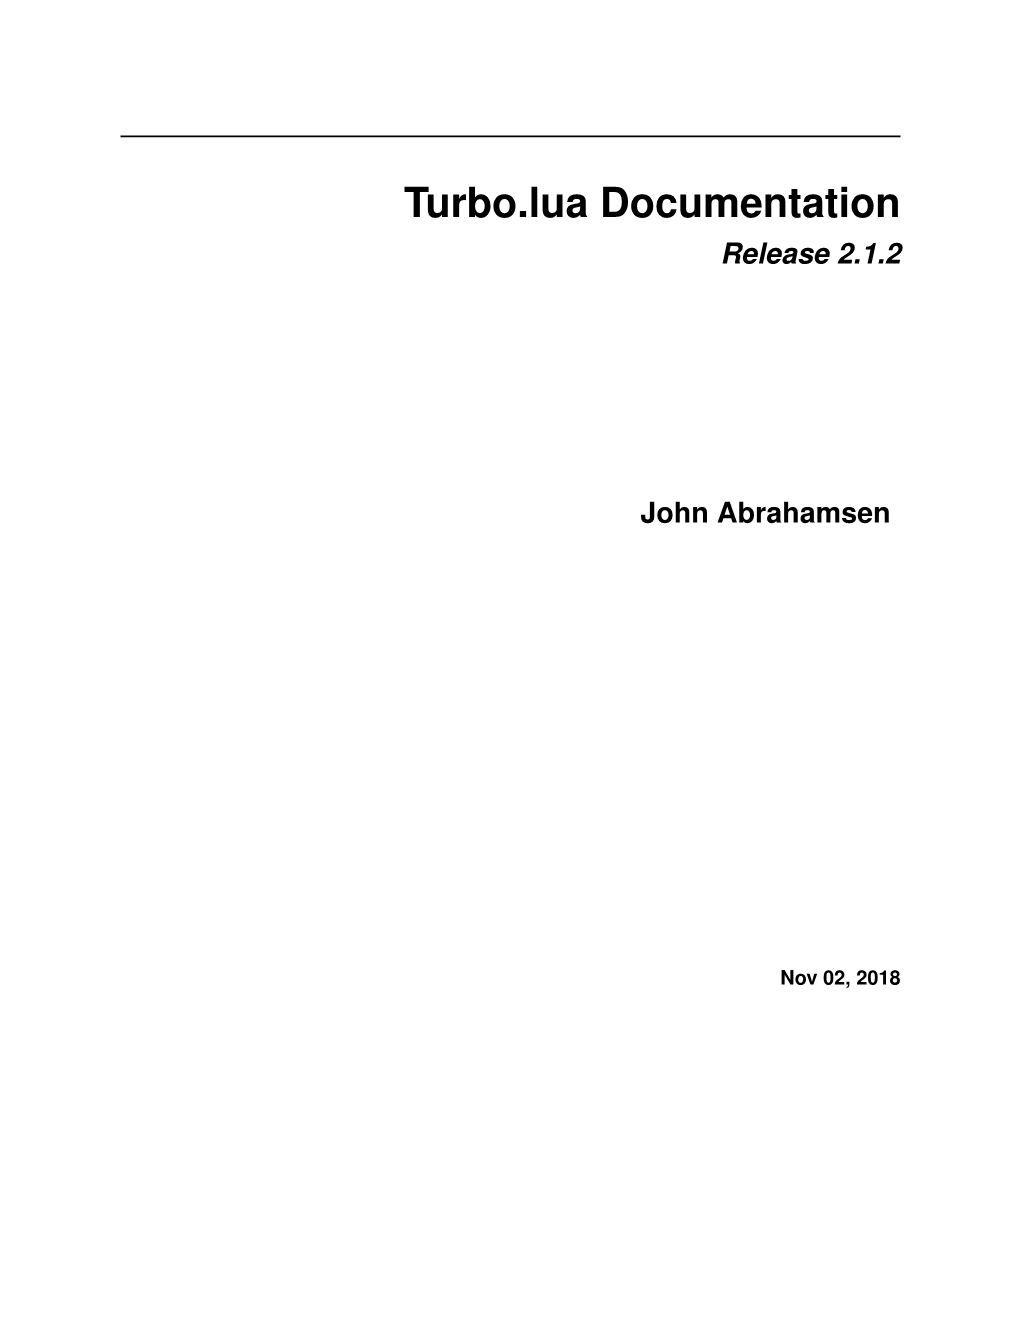 Turbo.Lua Documentation Release 2.1.2